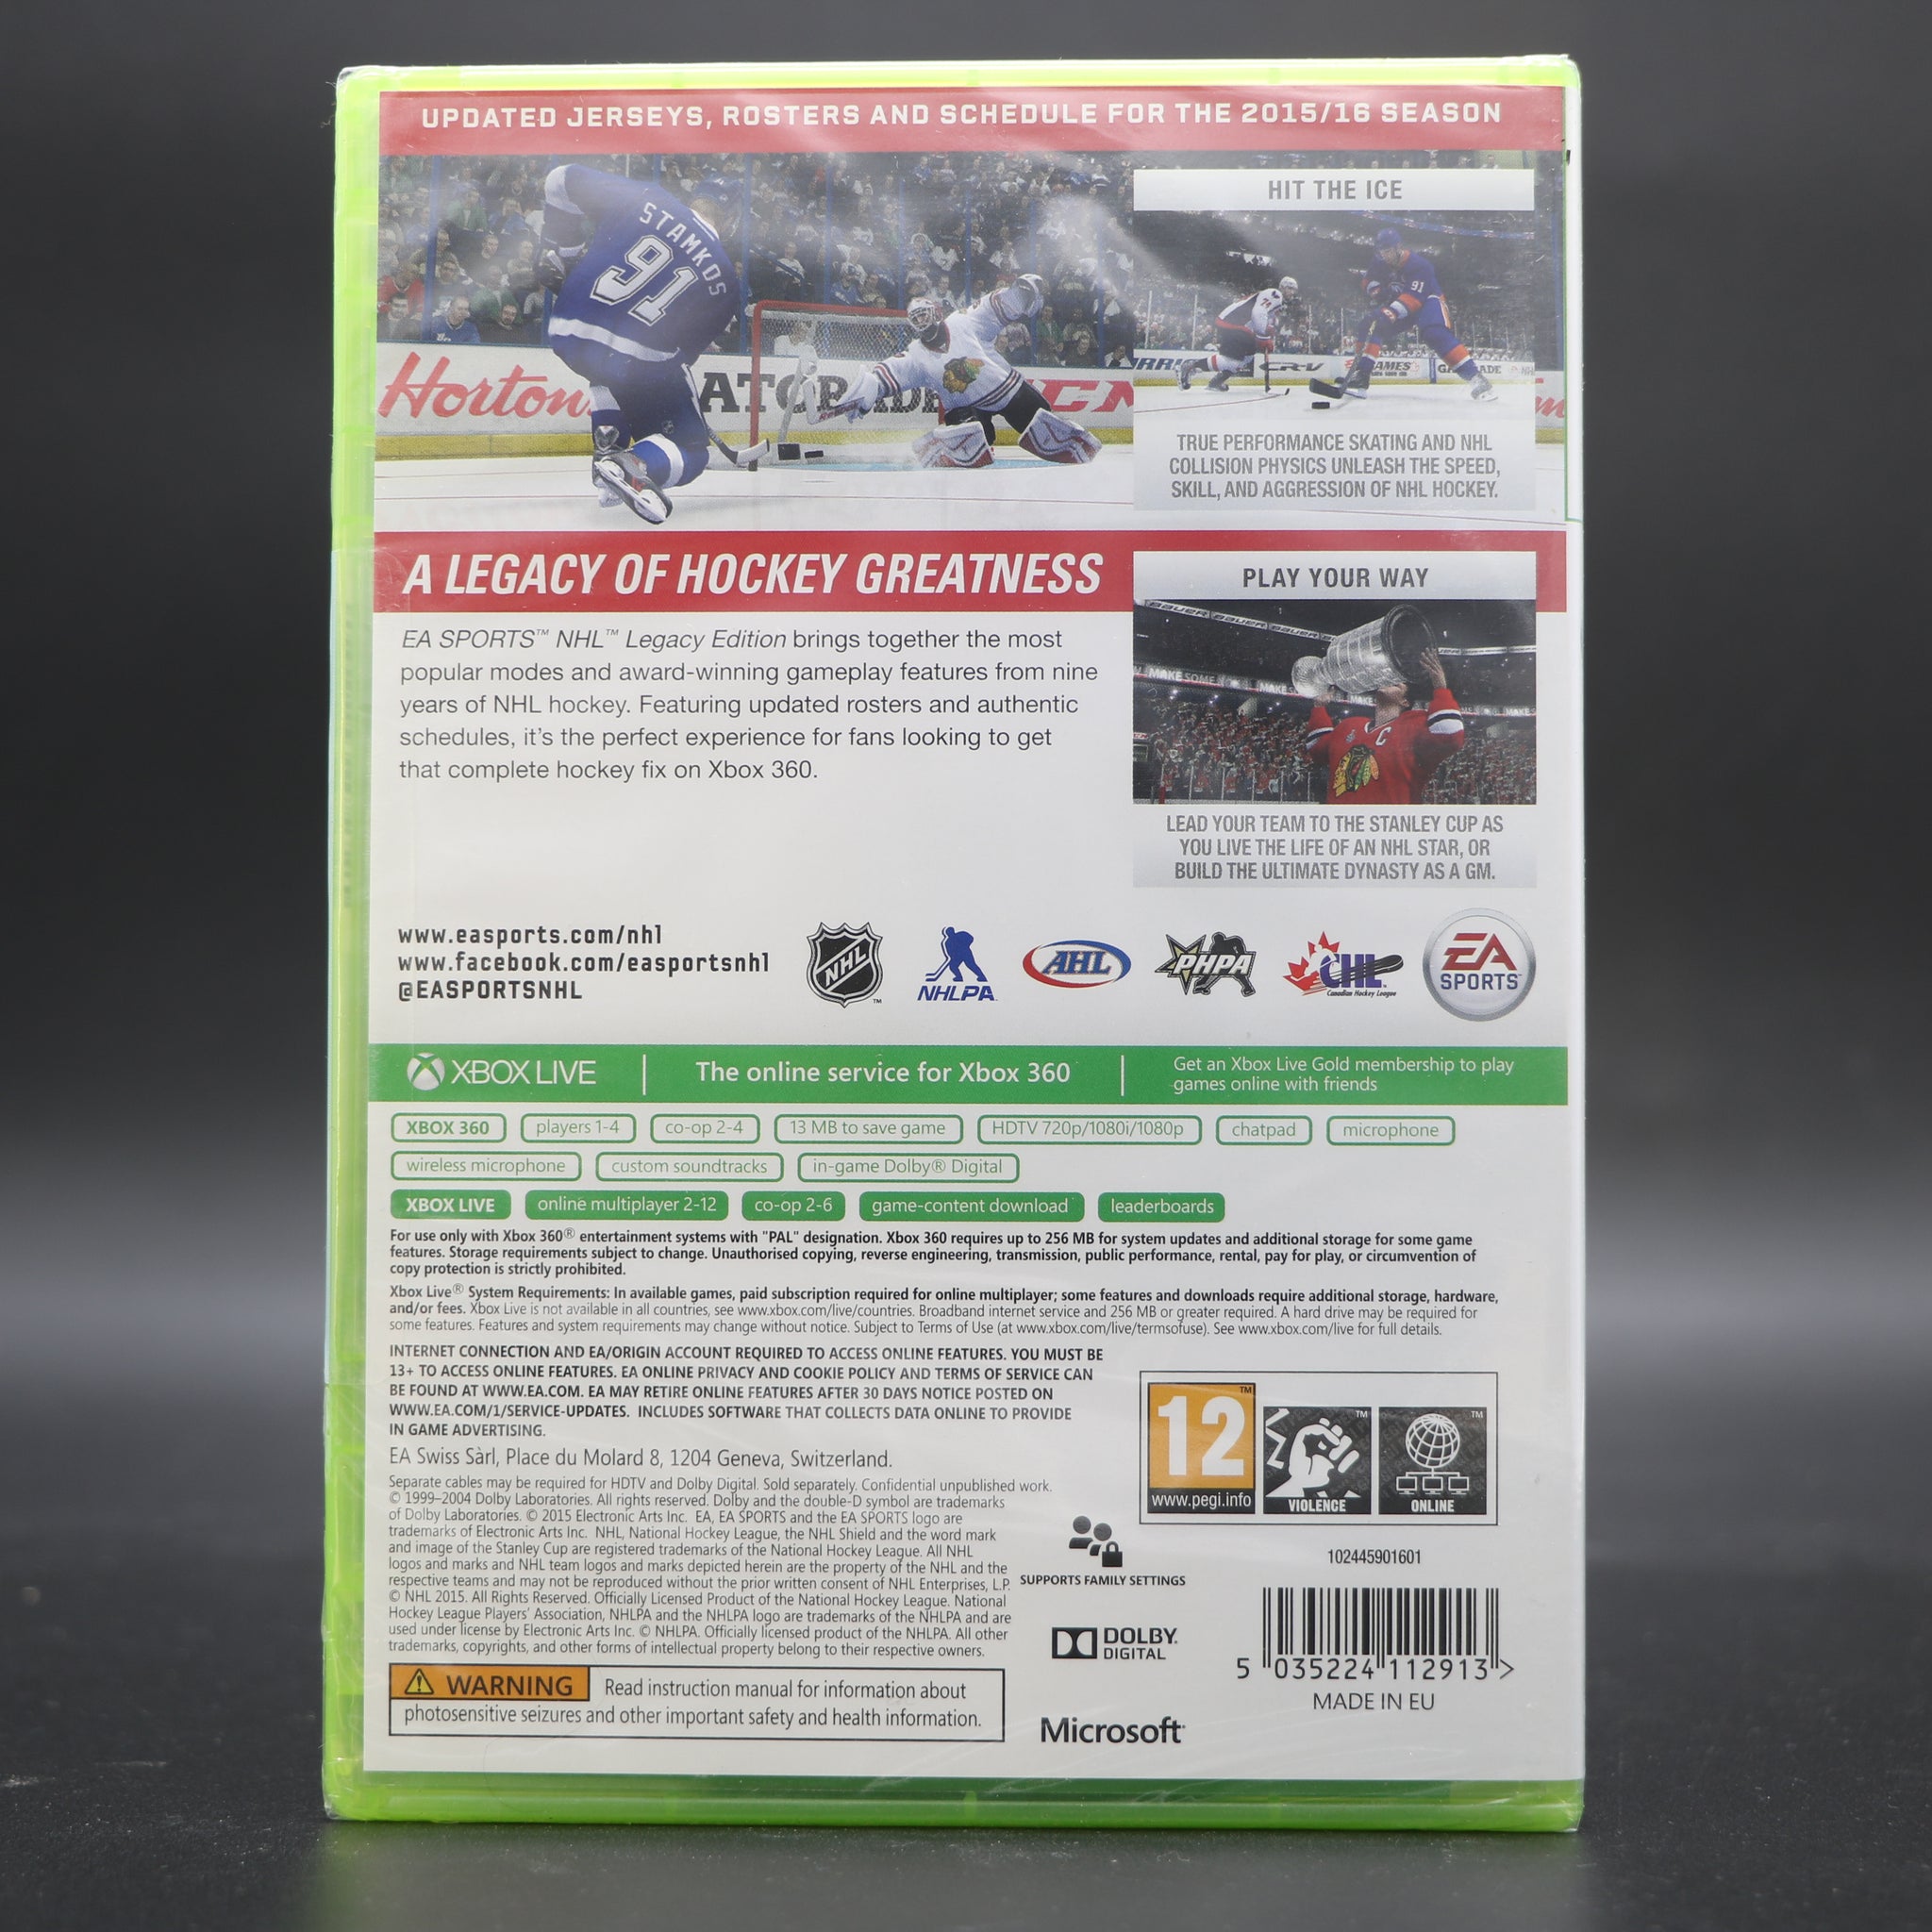 NHL Legacy Edition | EA Sports | Microsoft Xbox 360 Game | New & Sealed